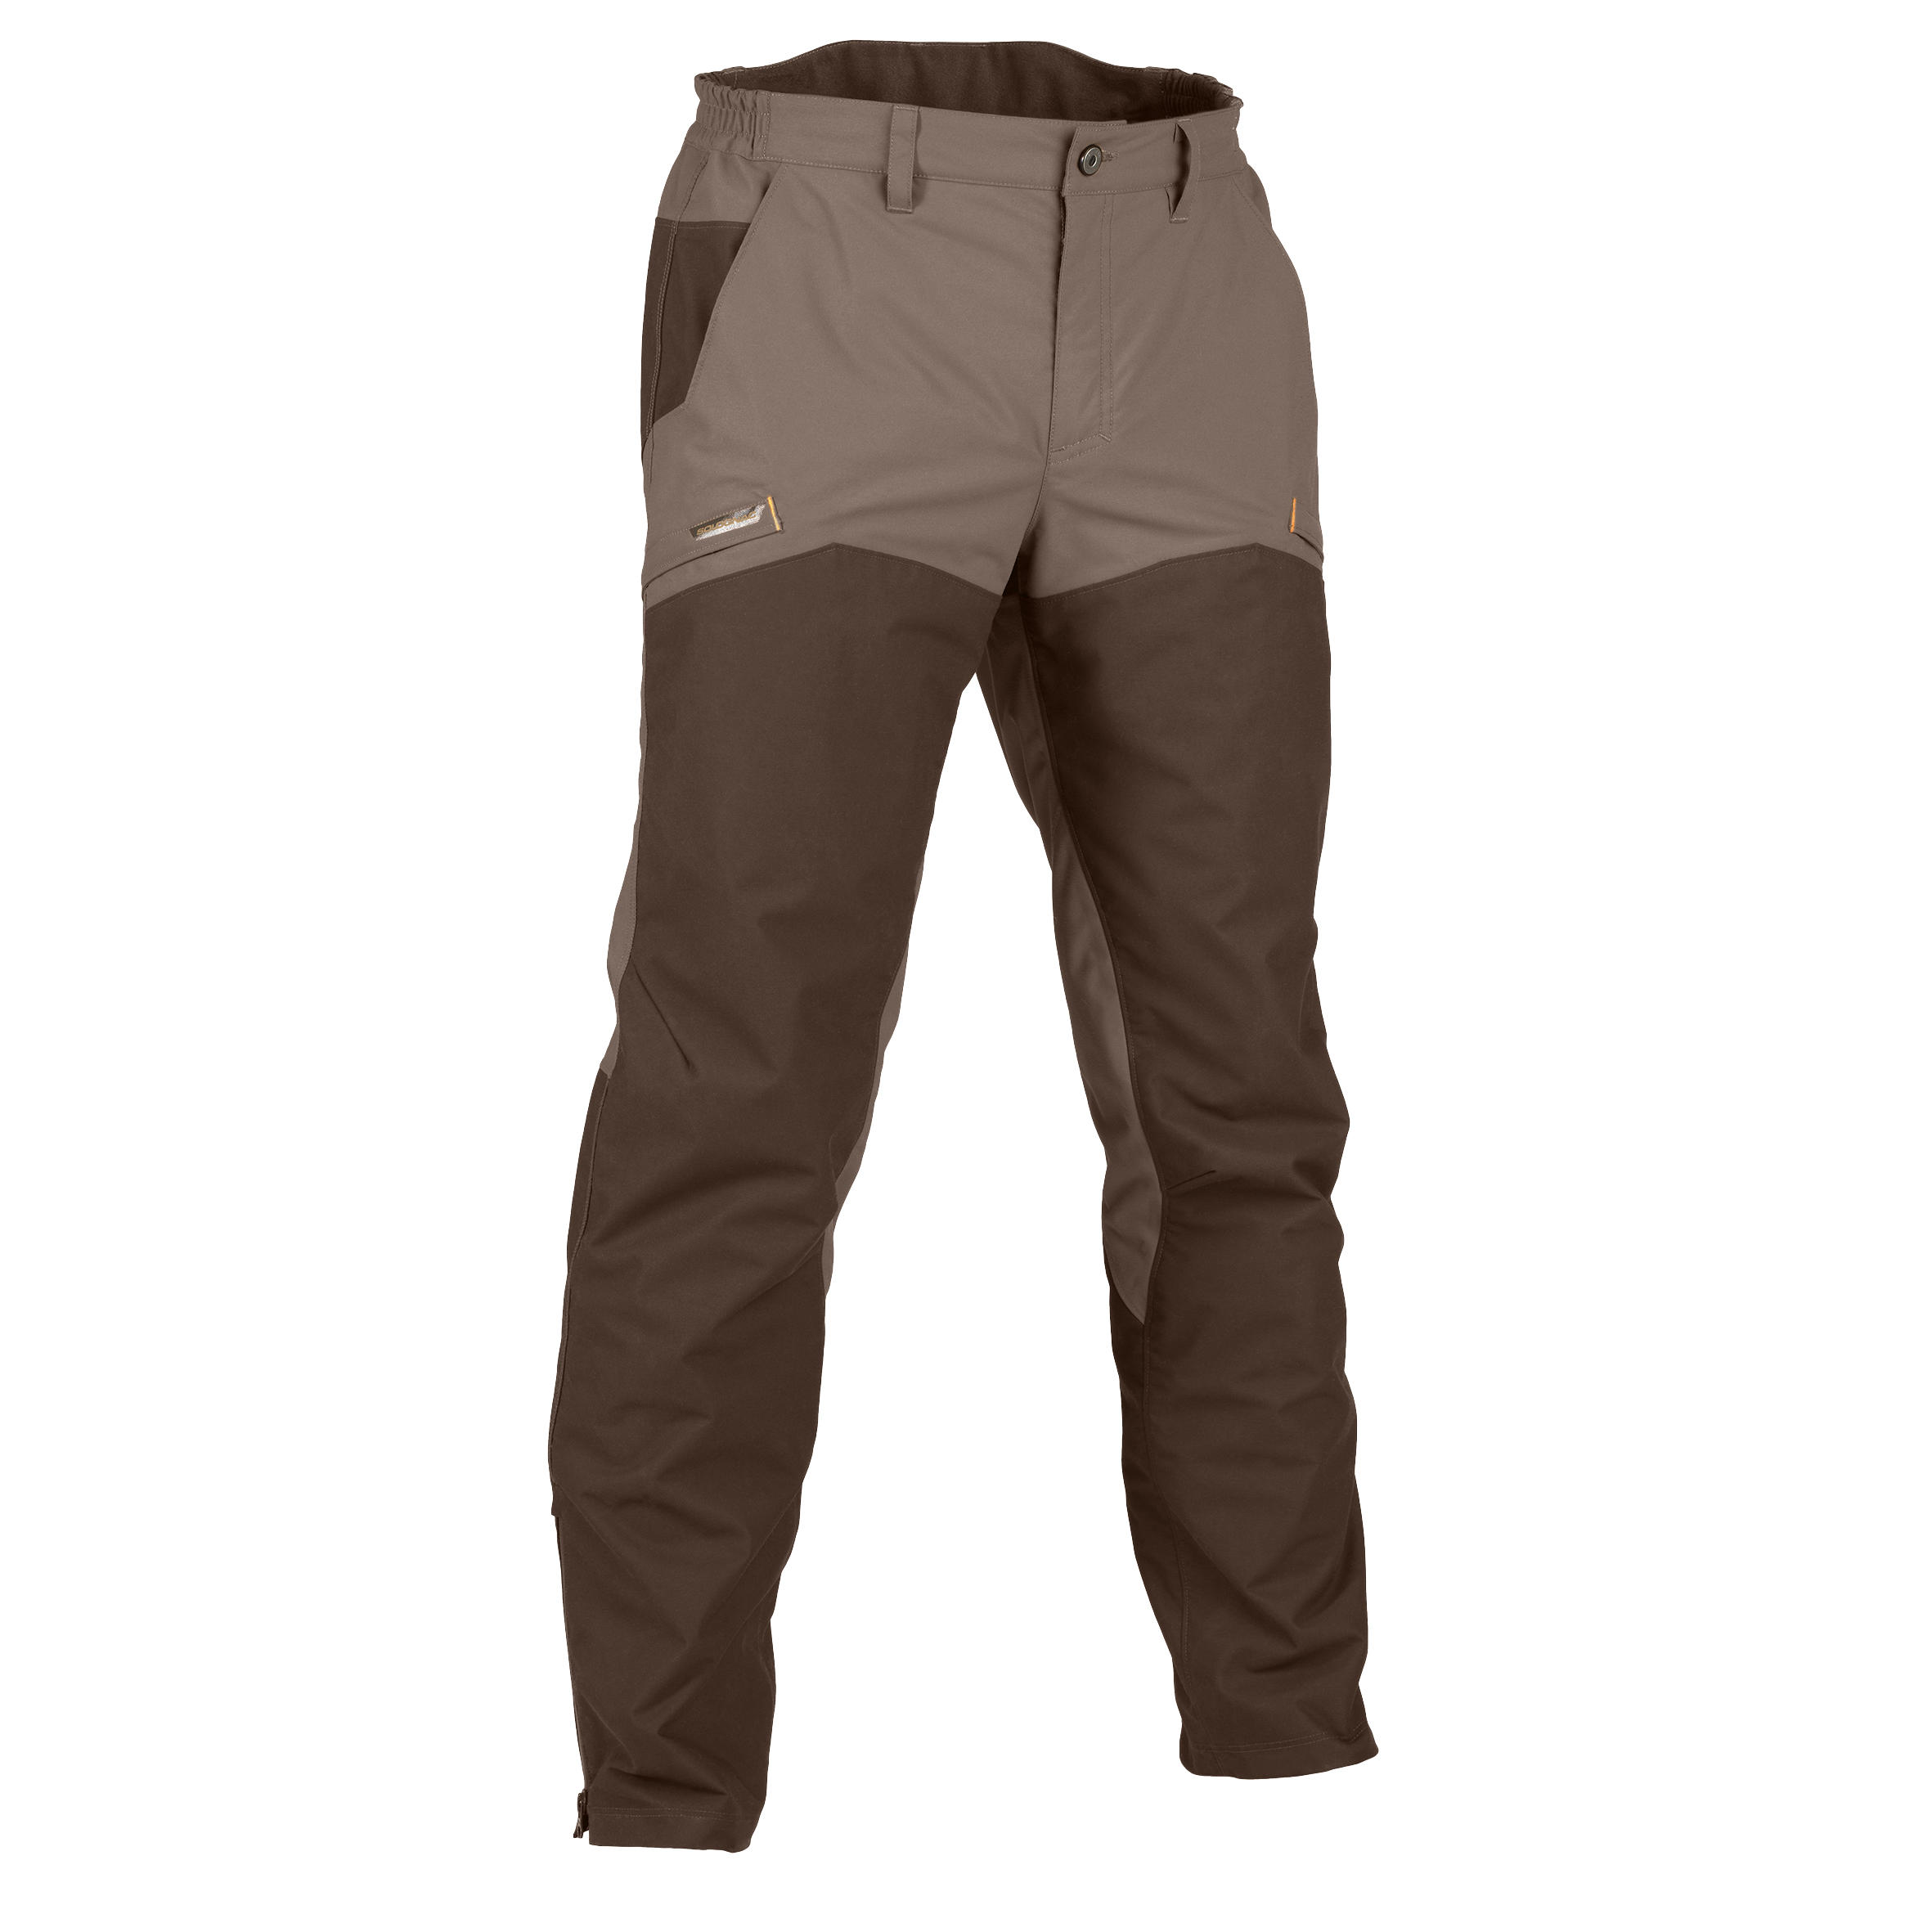 Pantalon 520 impermeabil rezistent Maro Bărbați La Oferta Online decathlon imagine La Oferta Online